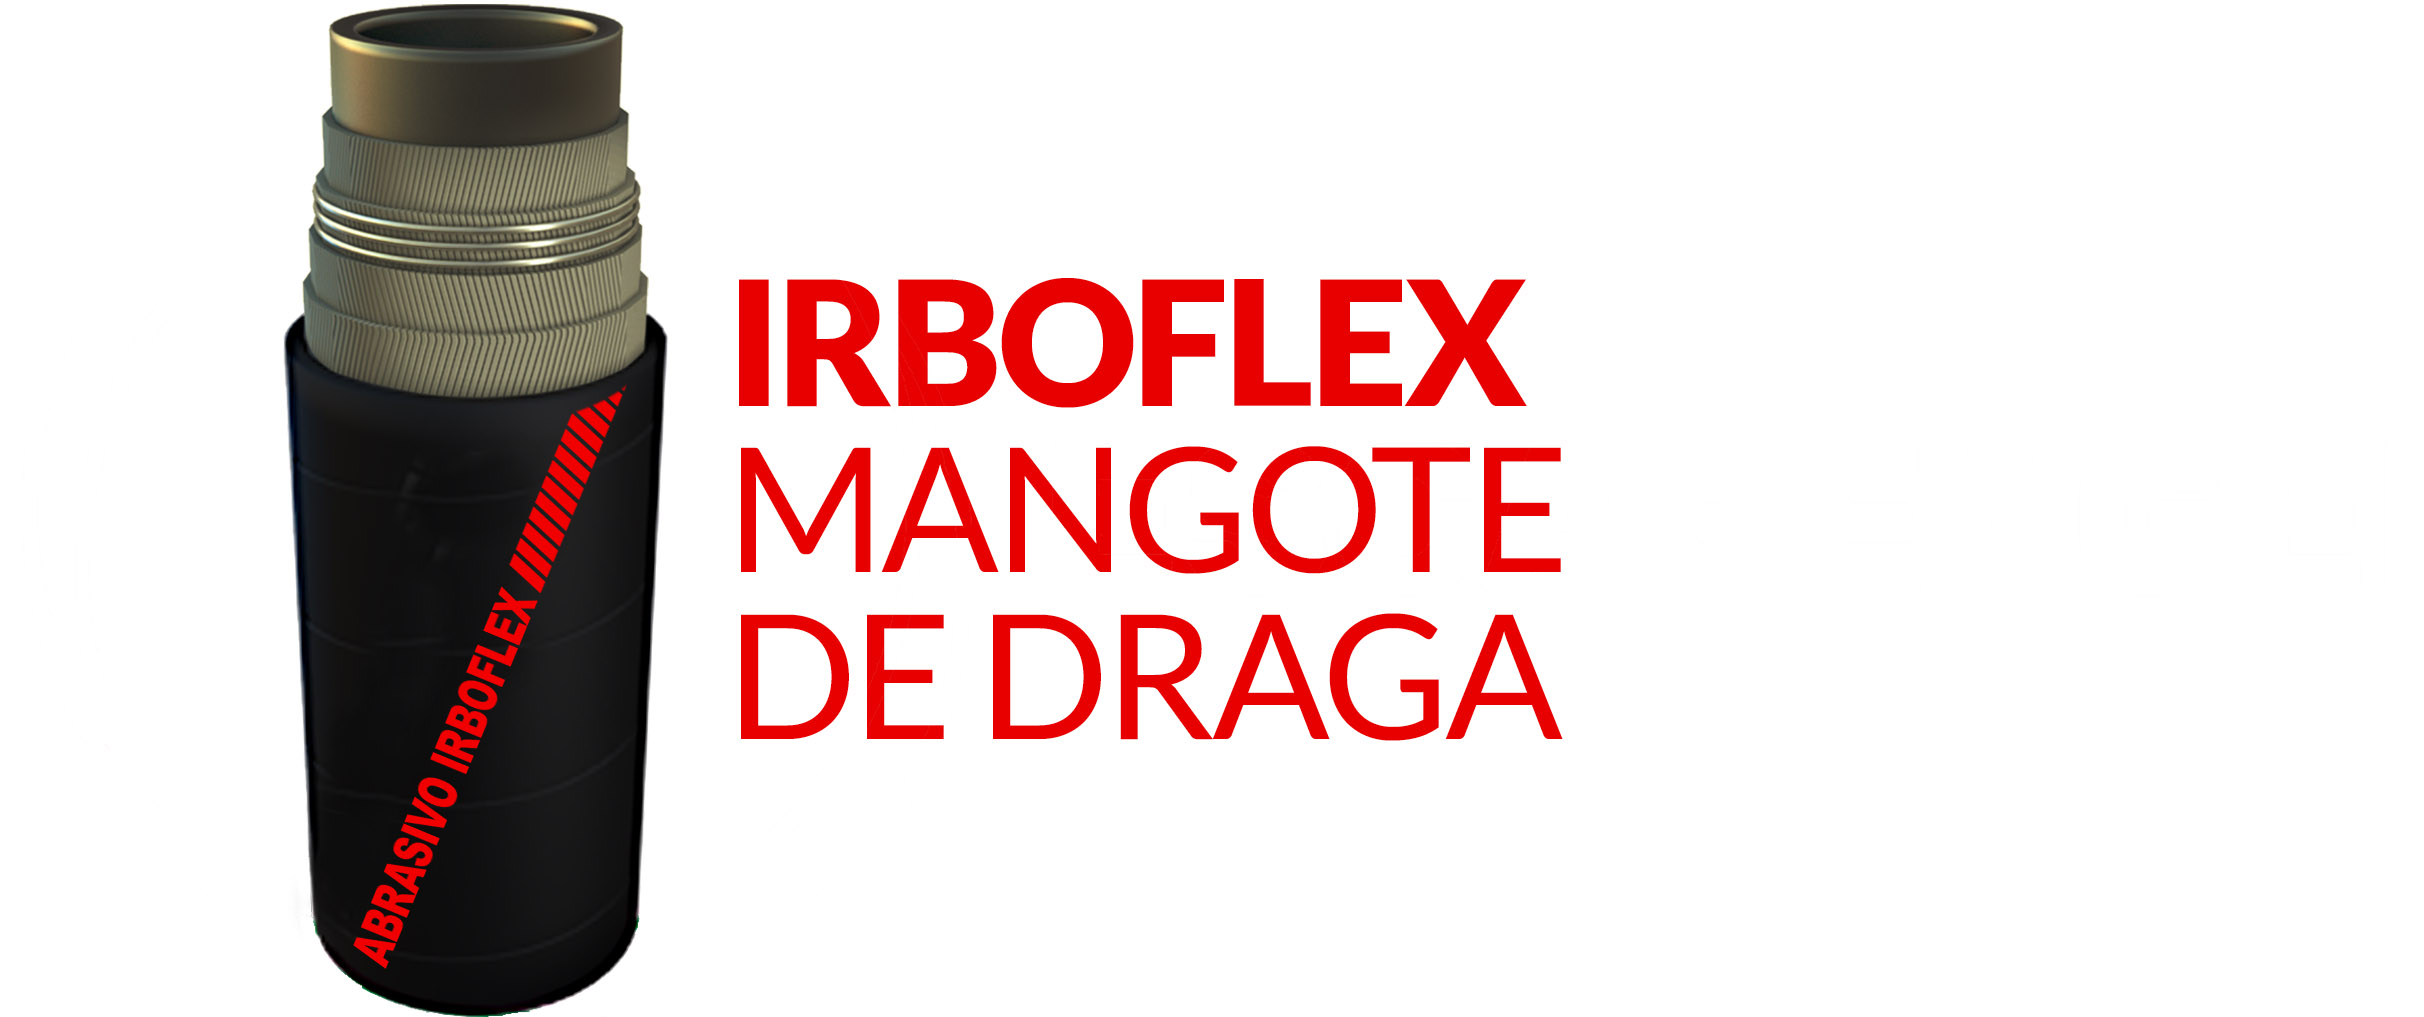 draga_-_-_irboflex-mangote-de-draga-copia